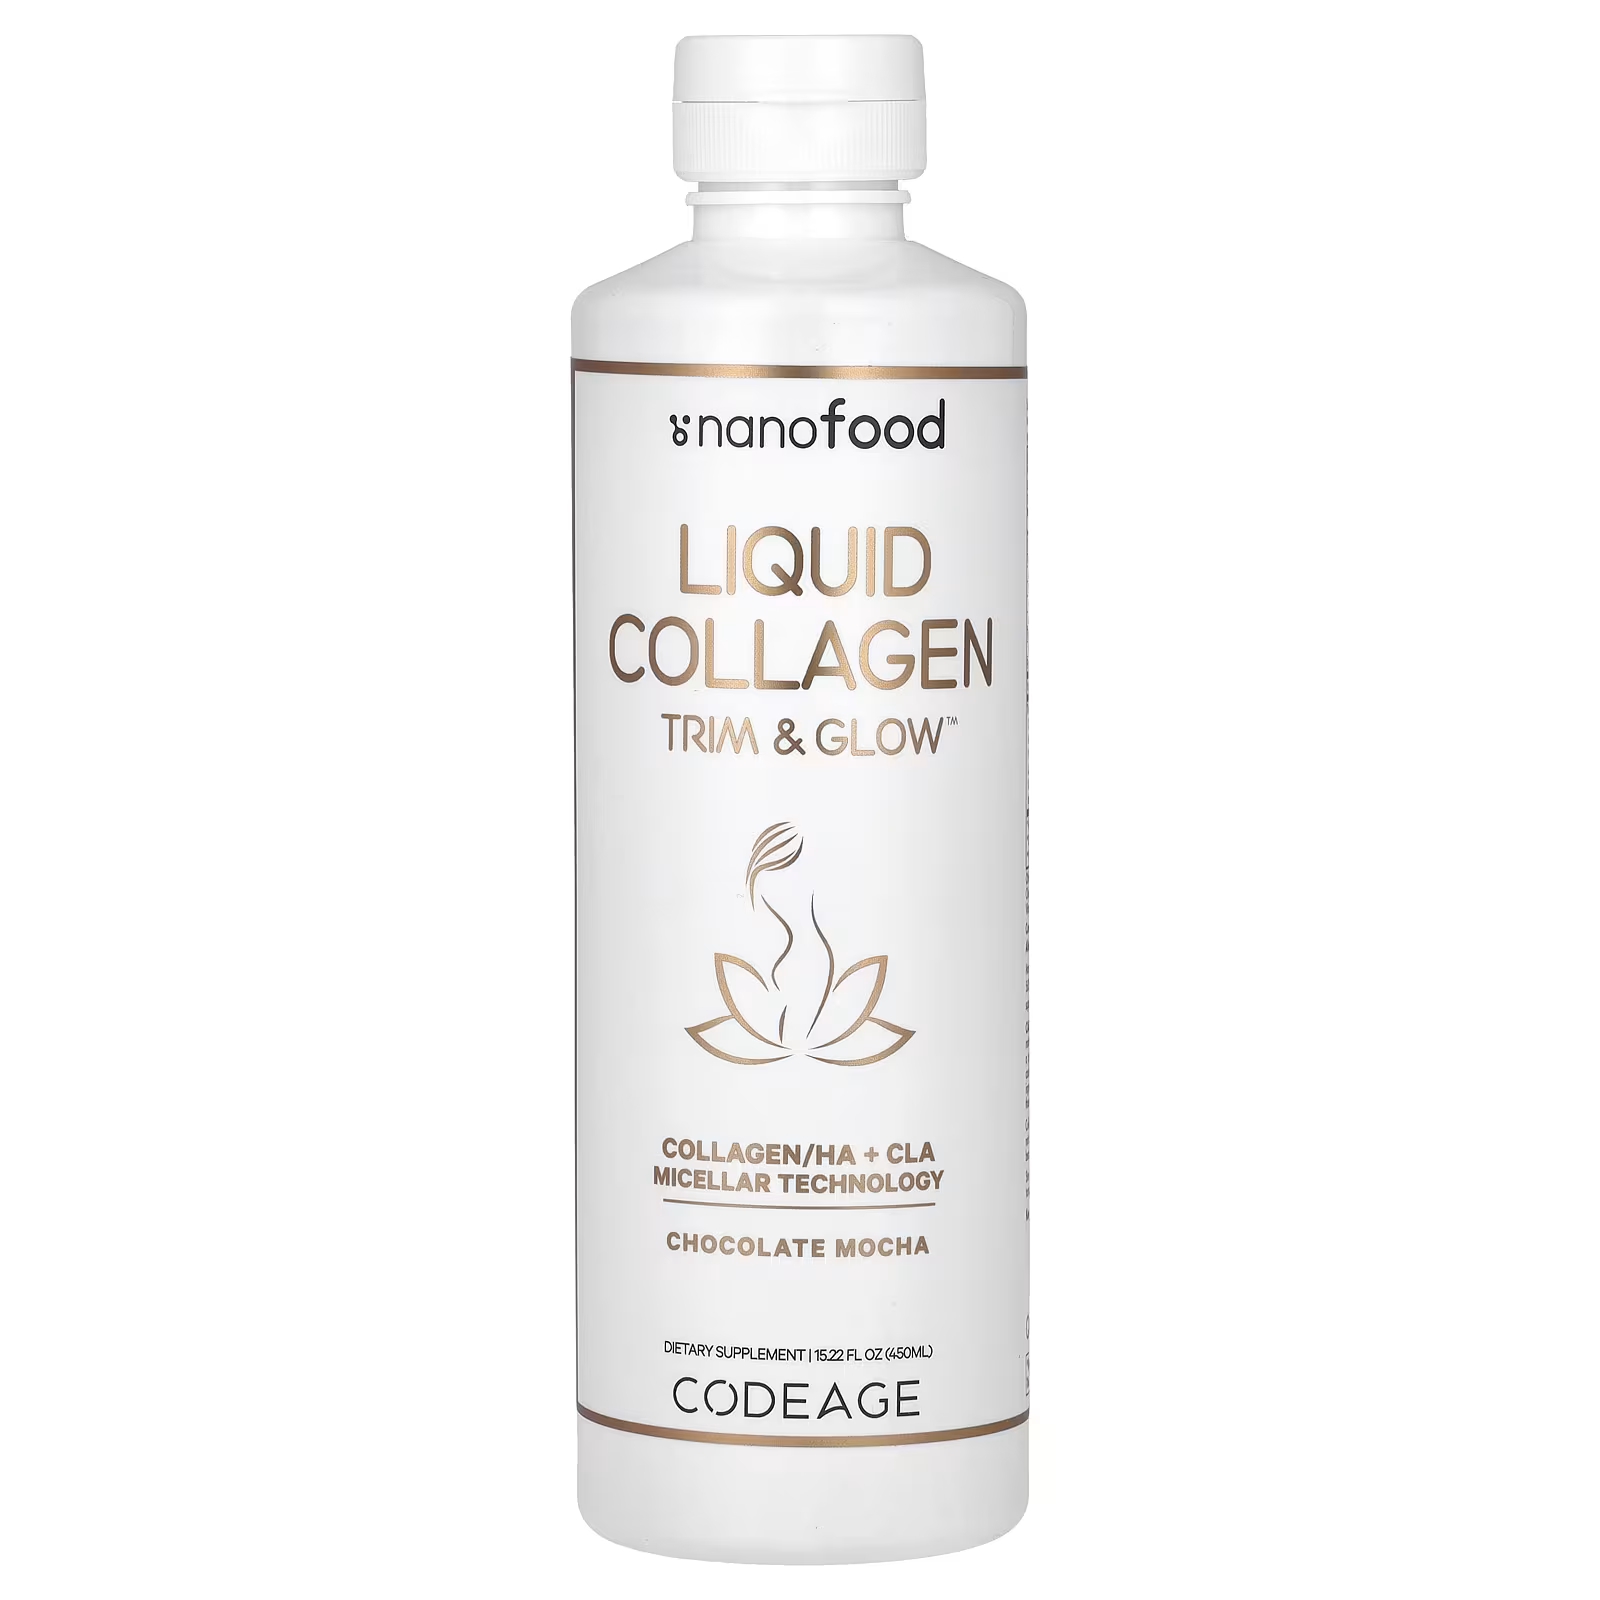 Codeage Nanofood Liquid Collagen Trim & Glow Chocolate Mocha, 15,22 жидких унции (450 мл) codeage nanofood liquid collagen trim